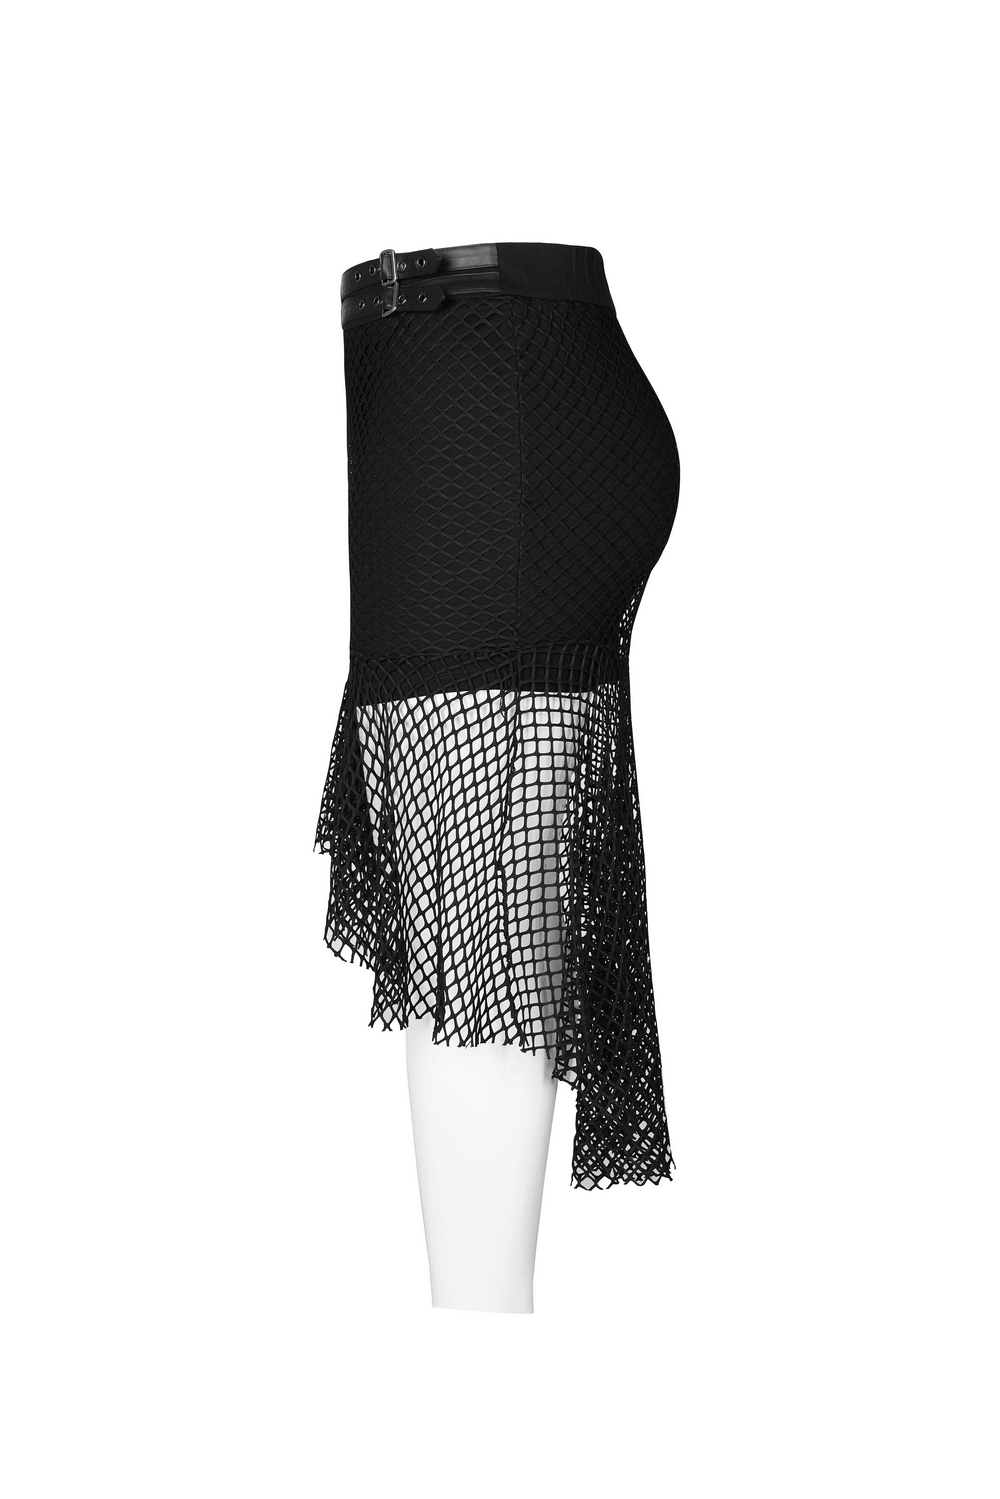 Chic Black Mesh Skirt with Buckles and Asymmetric Hem - HARD'N'HEAVY